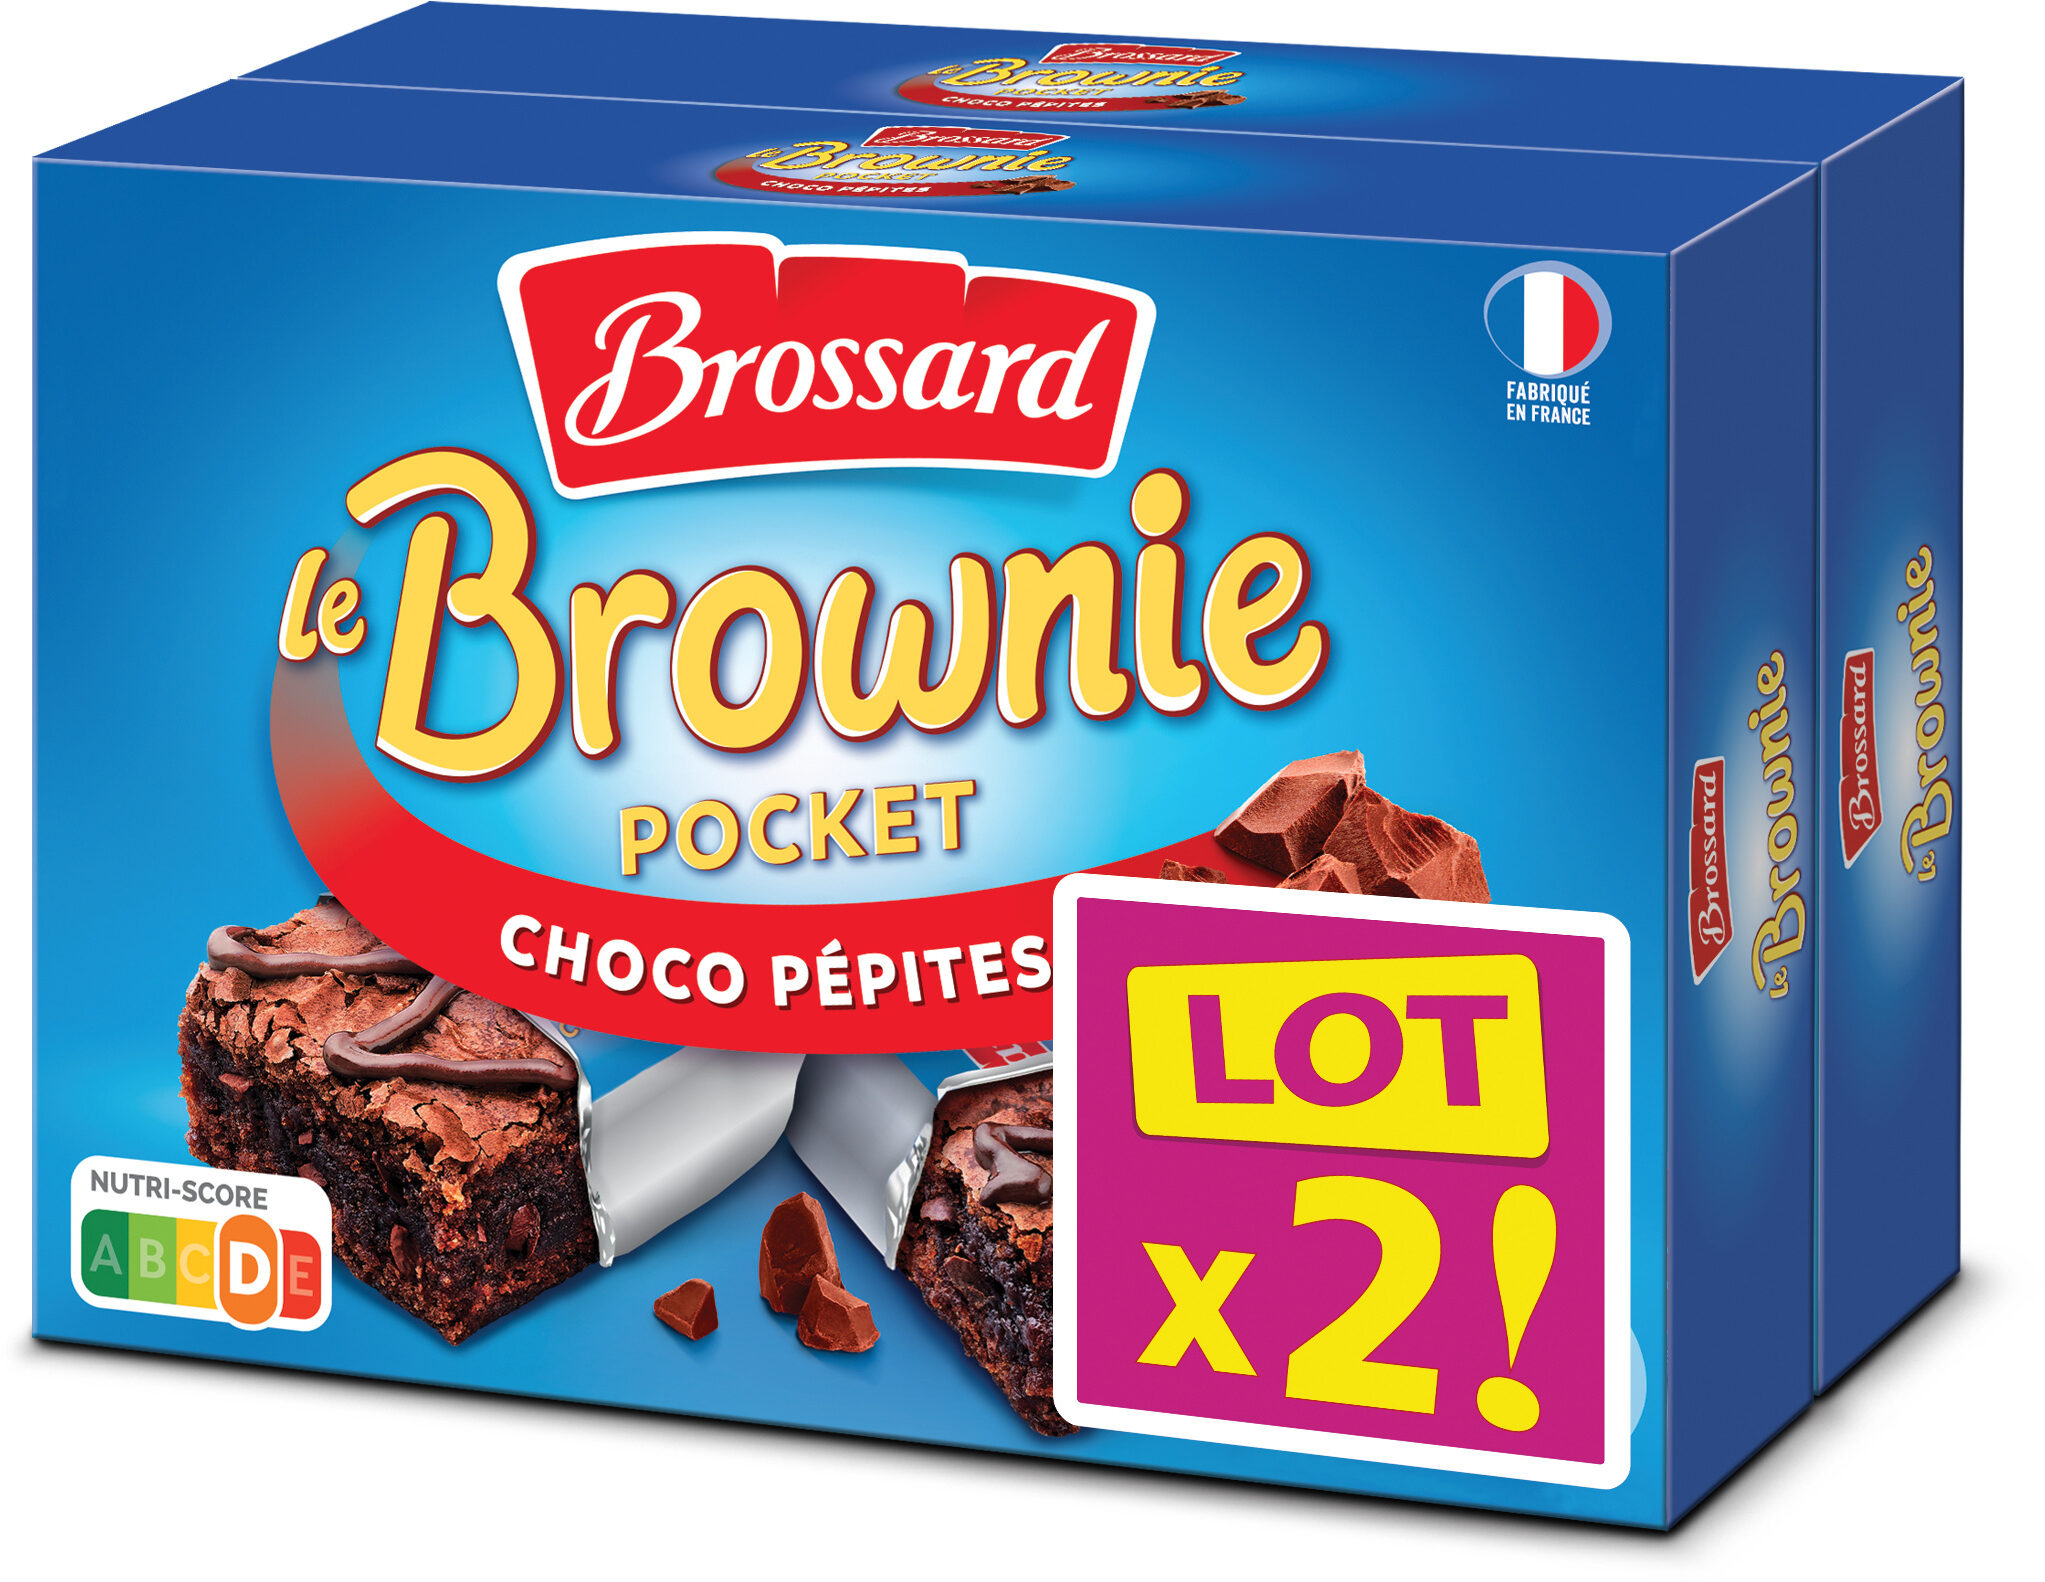 Brossard - lot 2 mini brownie chocolat pepites x8 - Product - fr